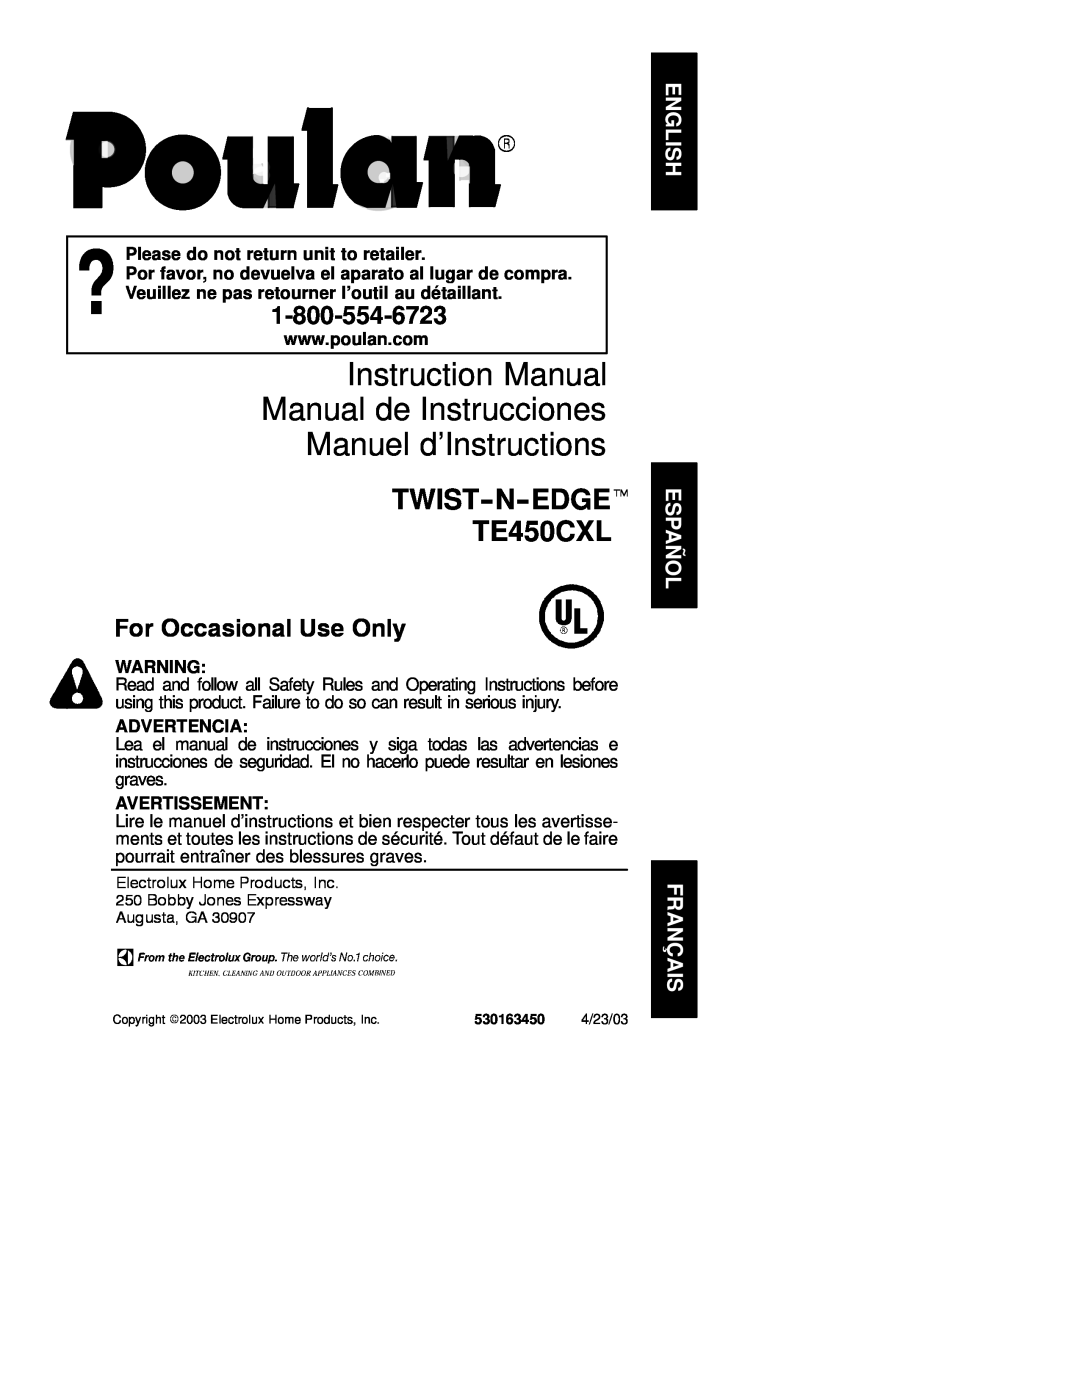 Poulan 530163450 instruction manual Please do not return unit to retailer, Advertencia, Avertissement 